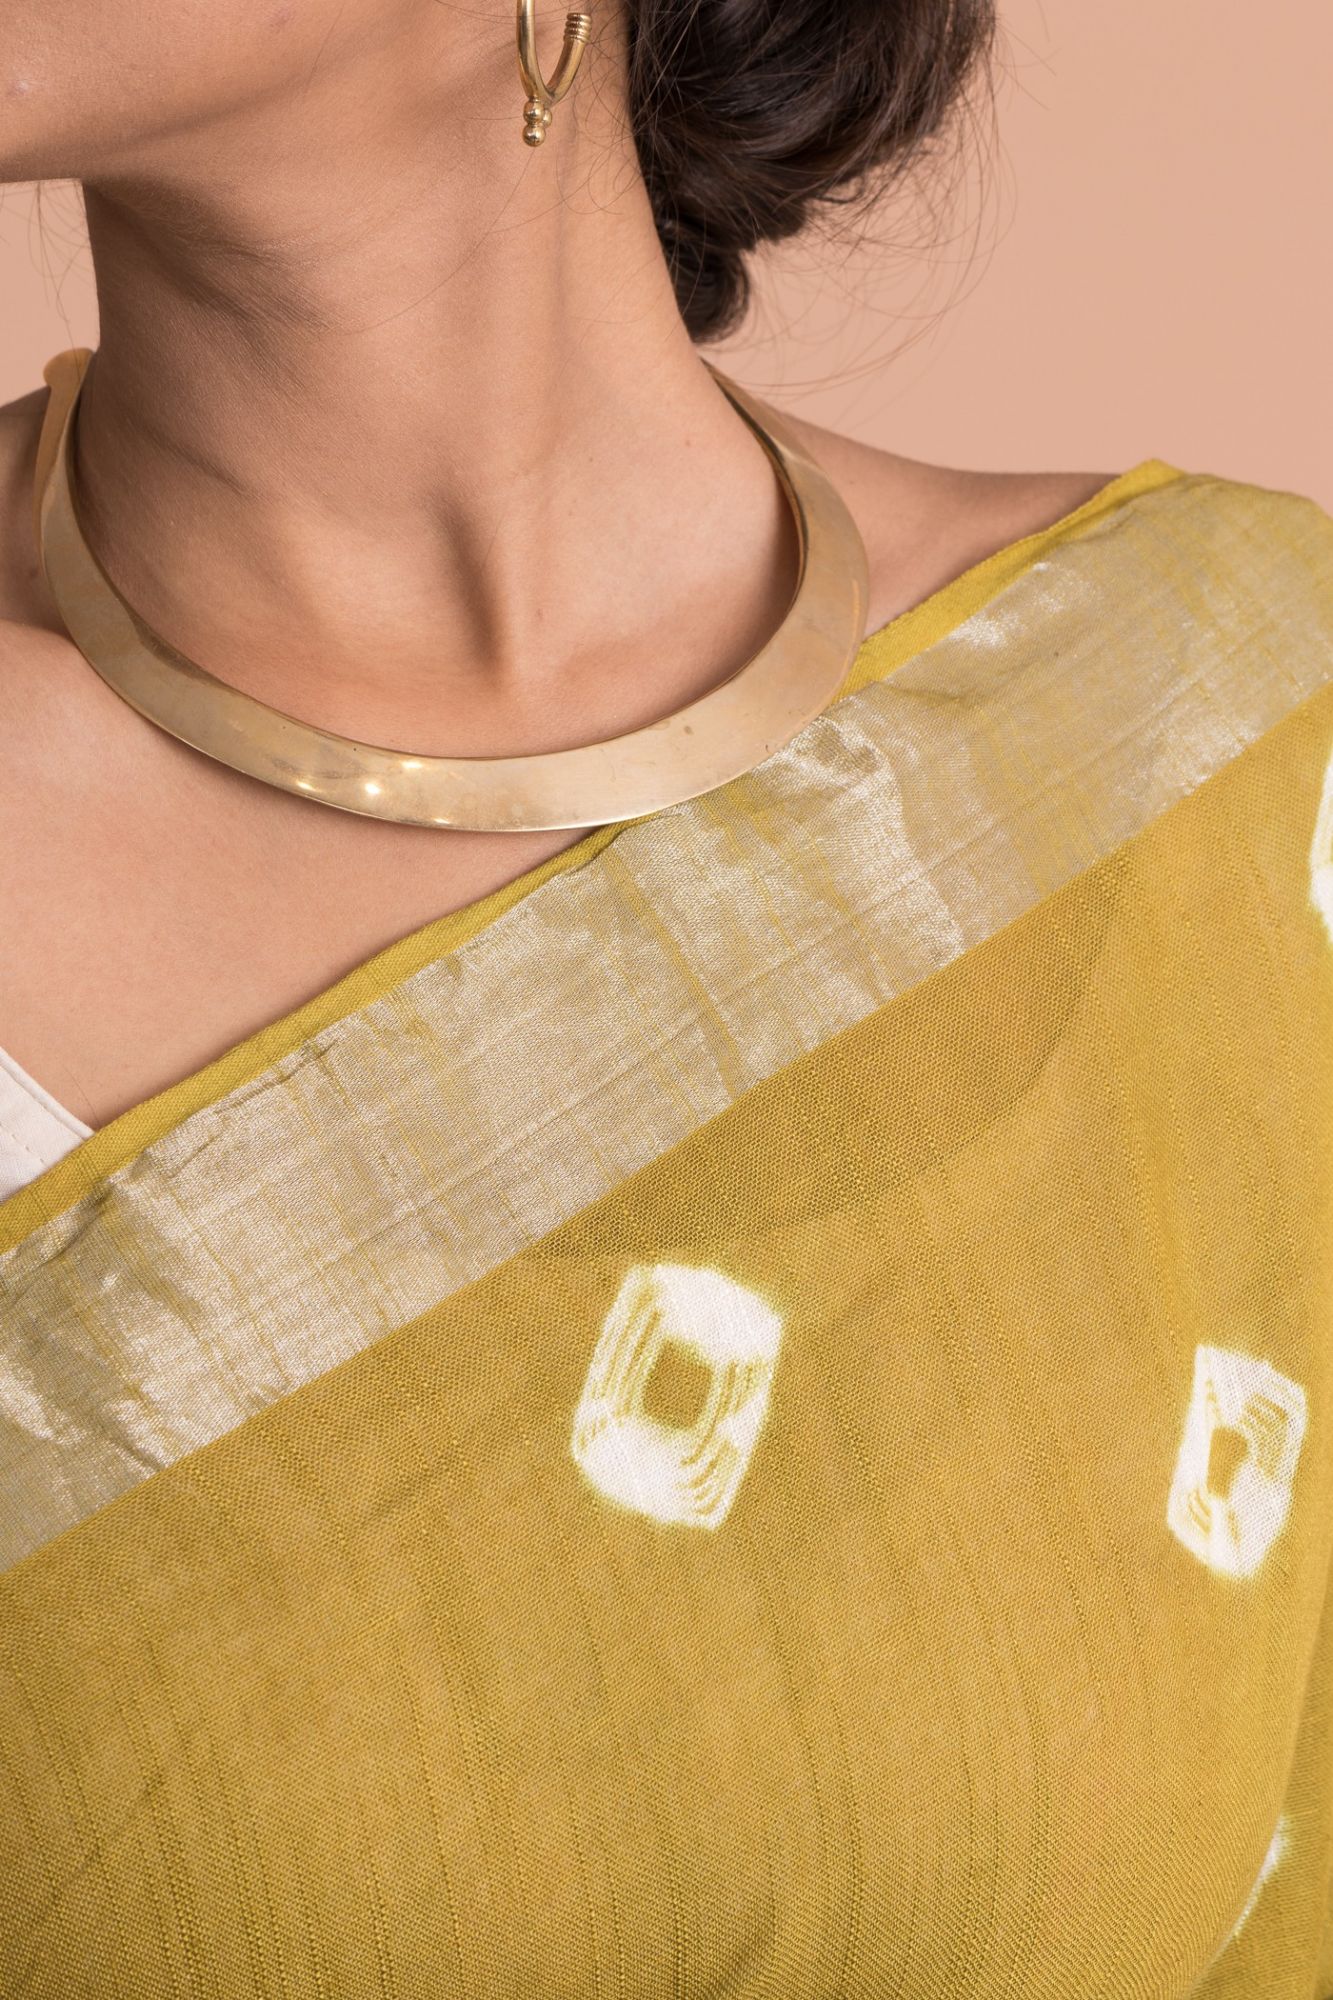 Women Tie And Dye Cotton Linen Saree with Unstitched Blouse - Multi-Color